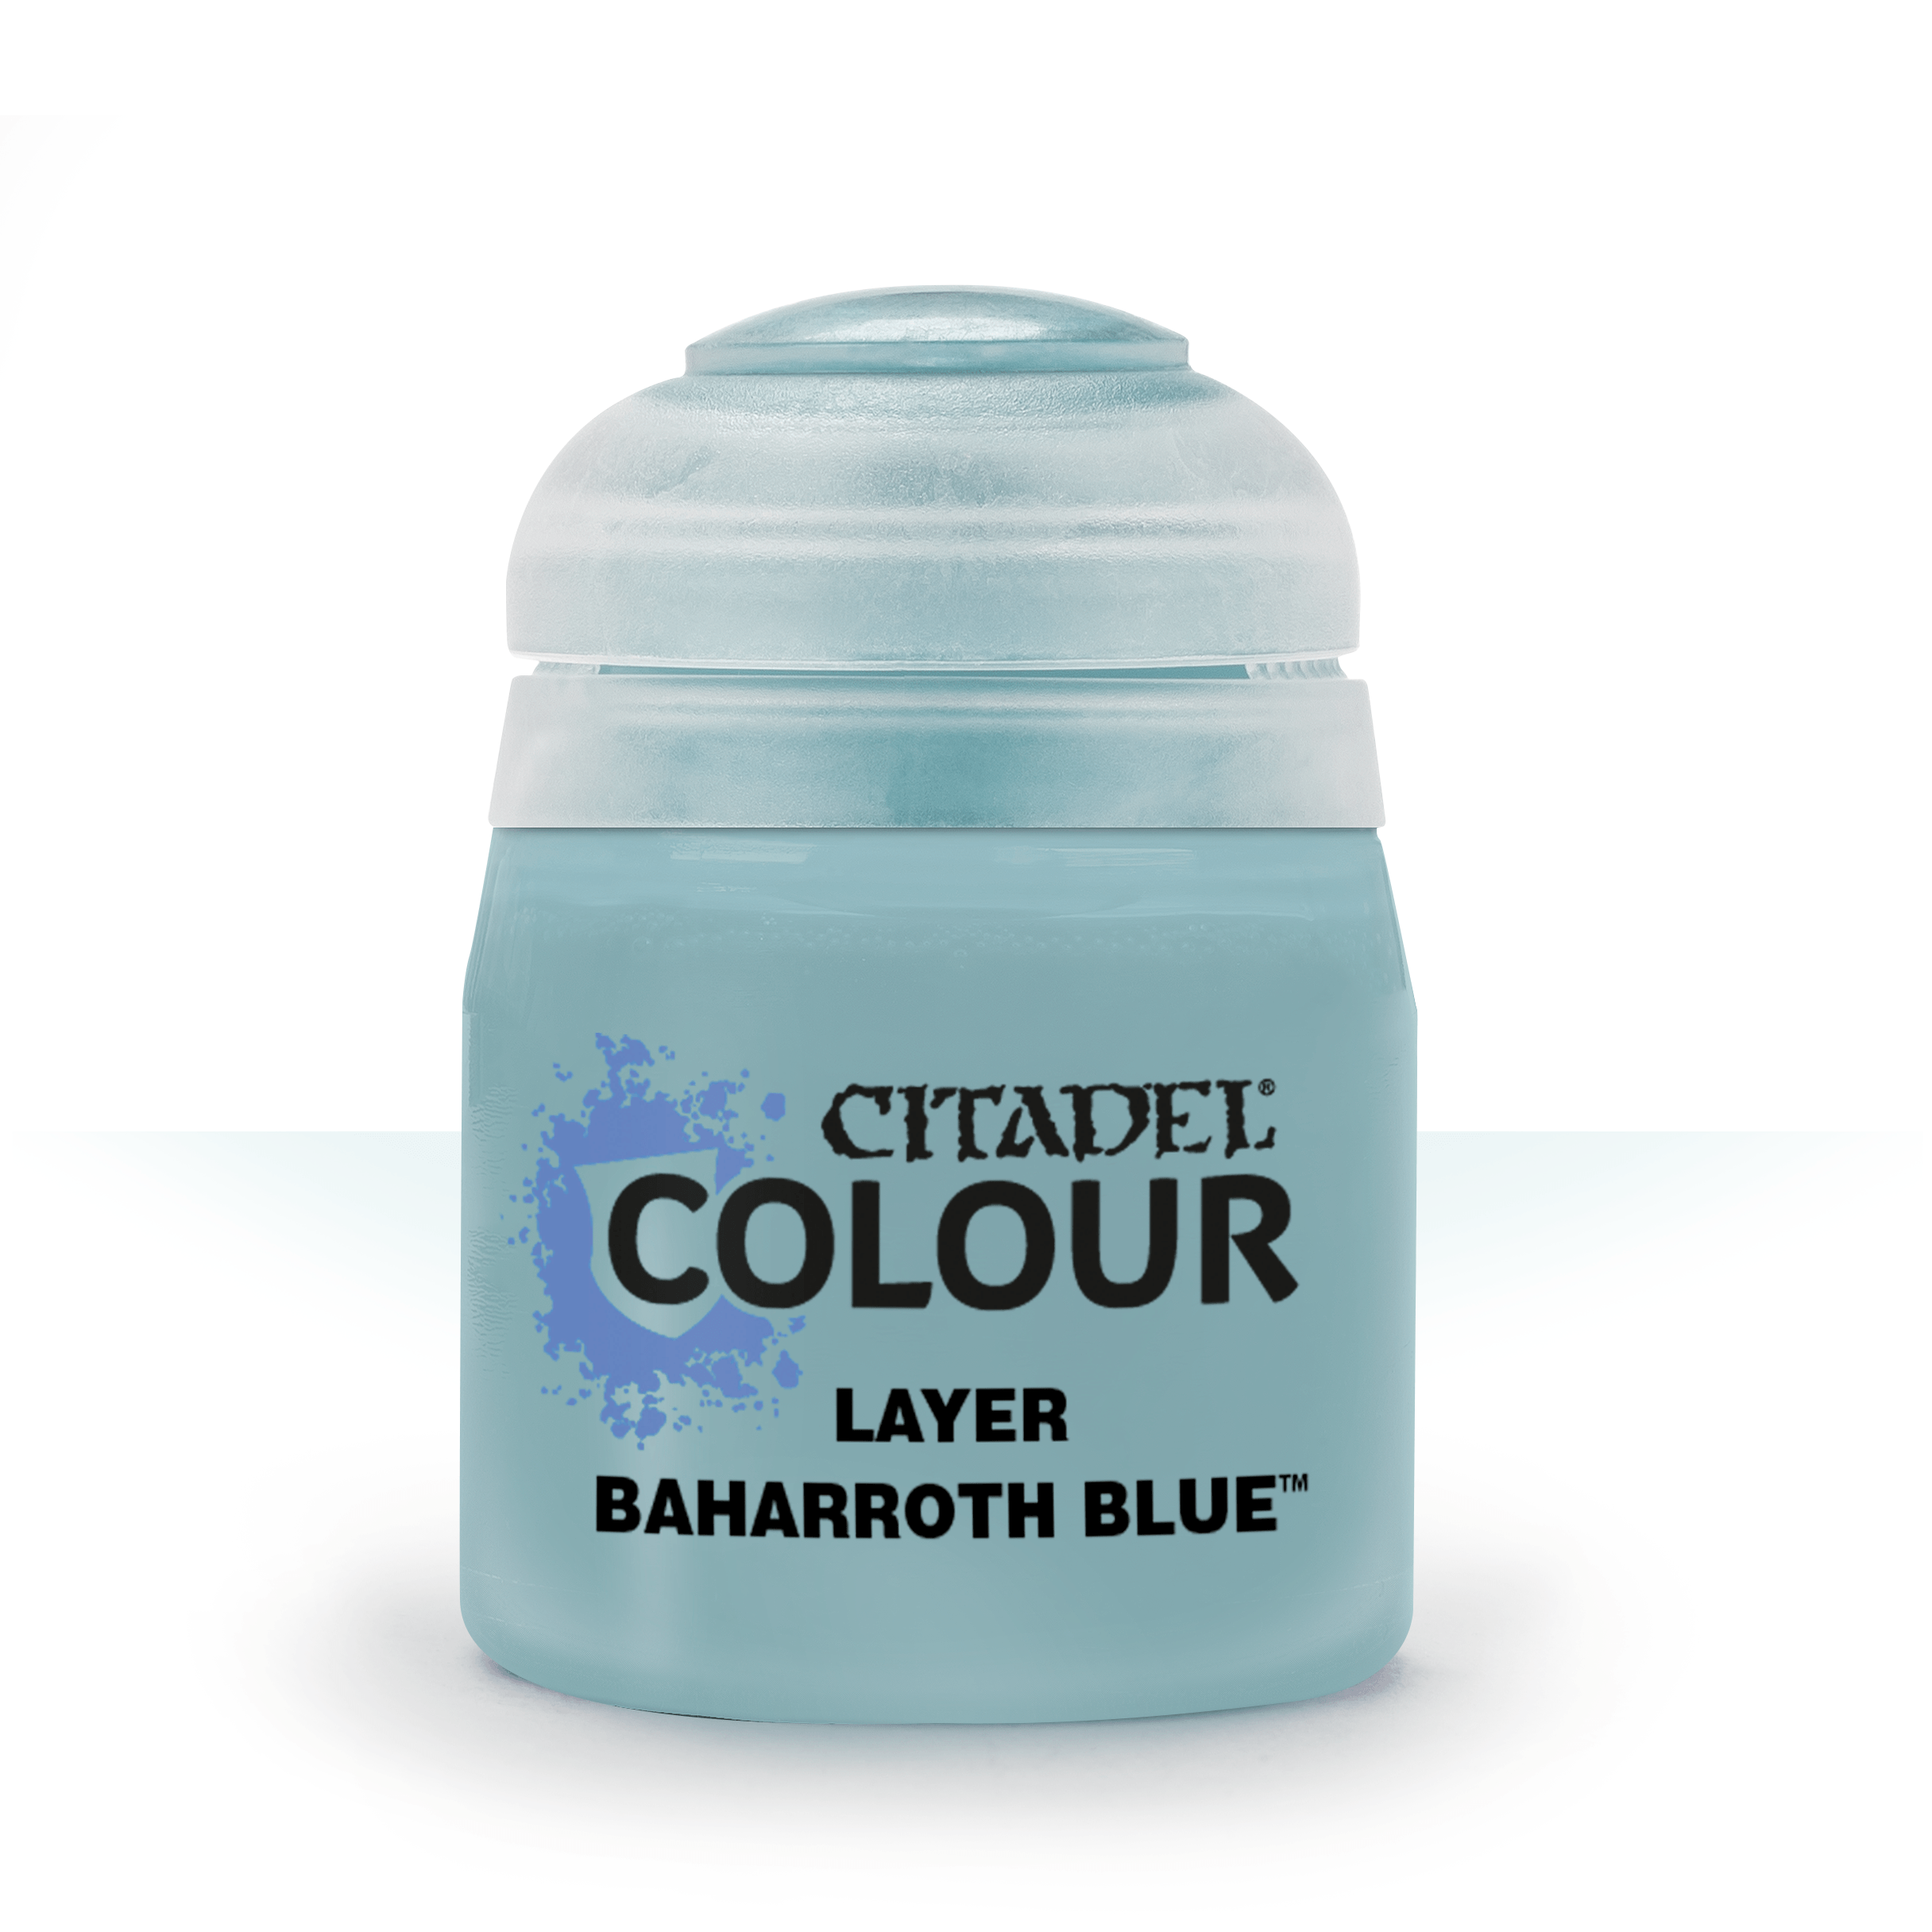 Layer Baharroth Blue - Citadel Colour